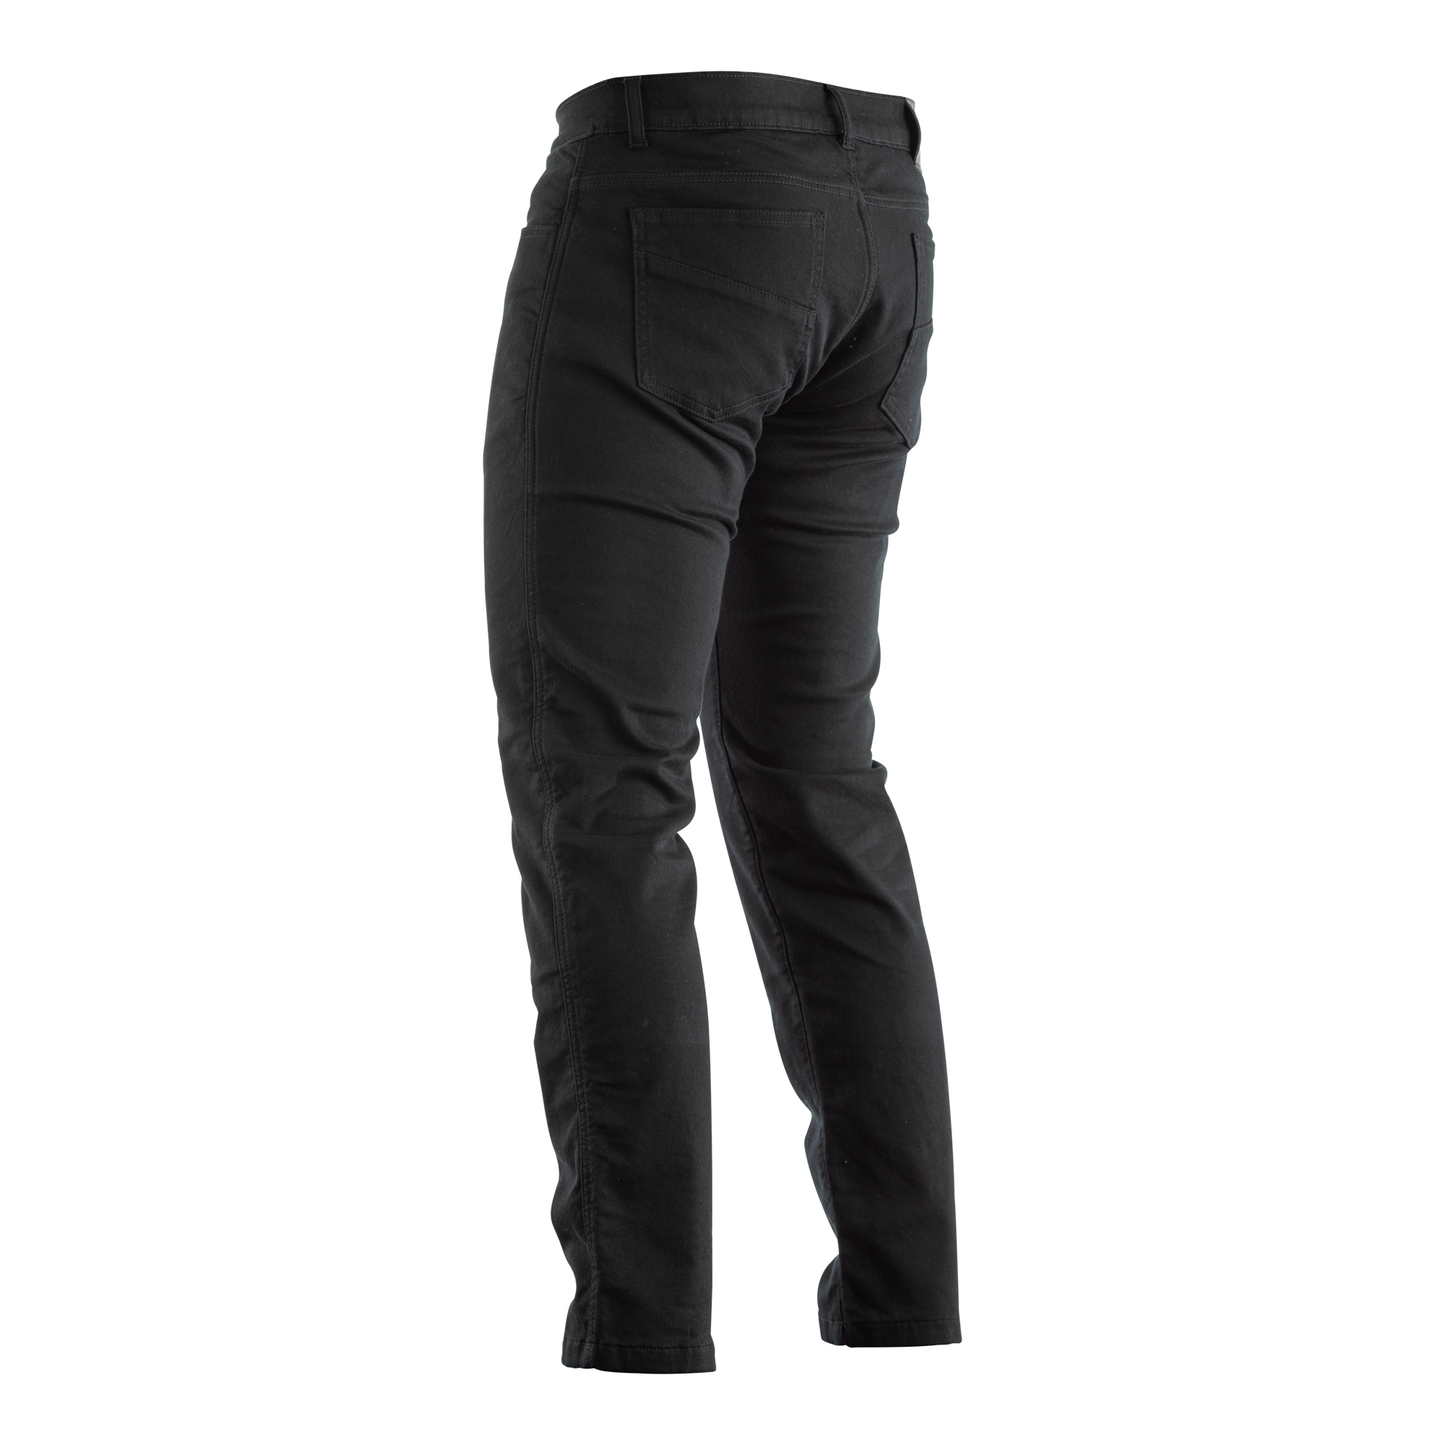 RST Metropolitan CE Men's Denim Riding Jeans - No Armour - Short Length - Black